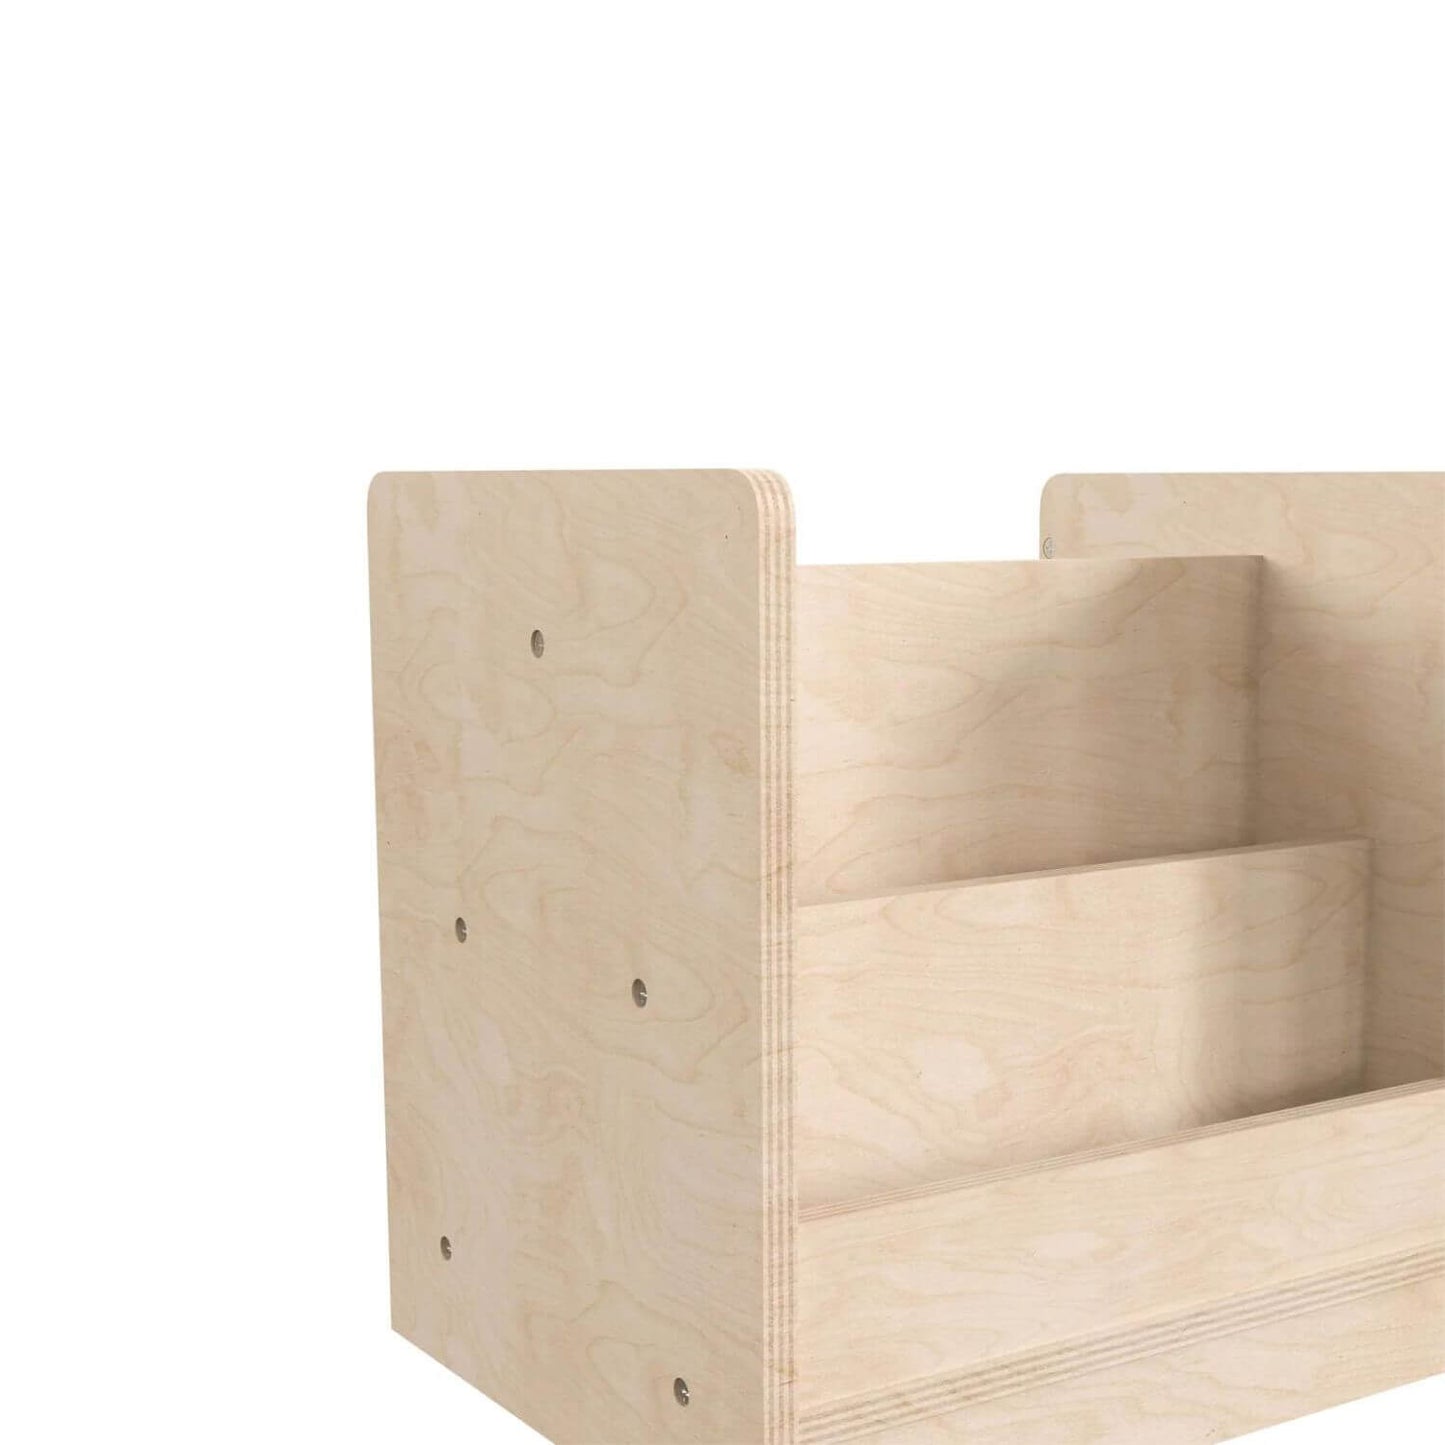 Flash Furniture Bright Beginnings 2-Tier/2 Side Shelf with Clear Storage Bin